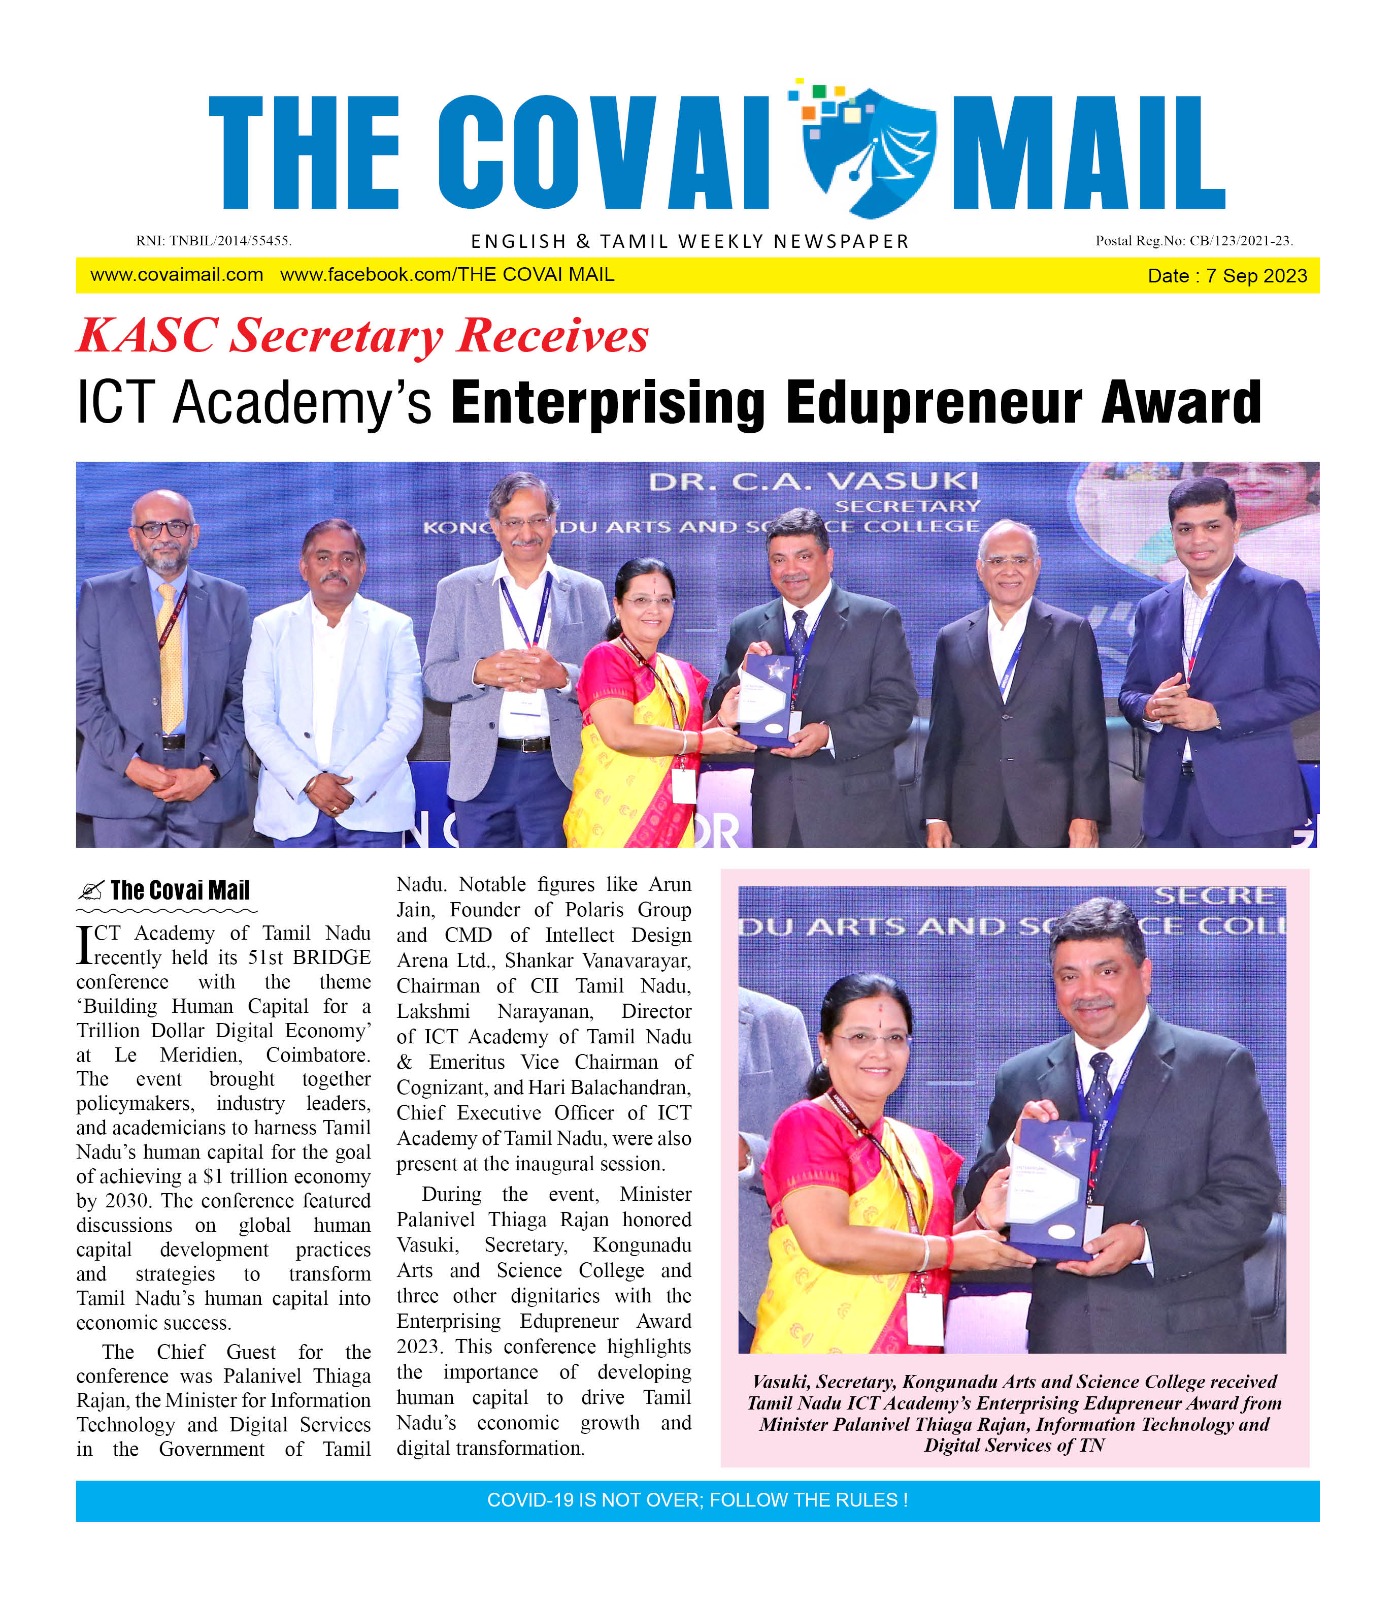 ICT Academy Enterprising Edupreneur Award 2023 